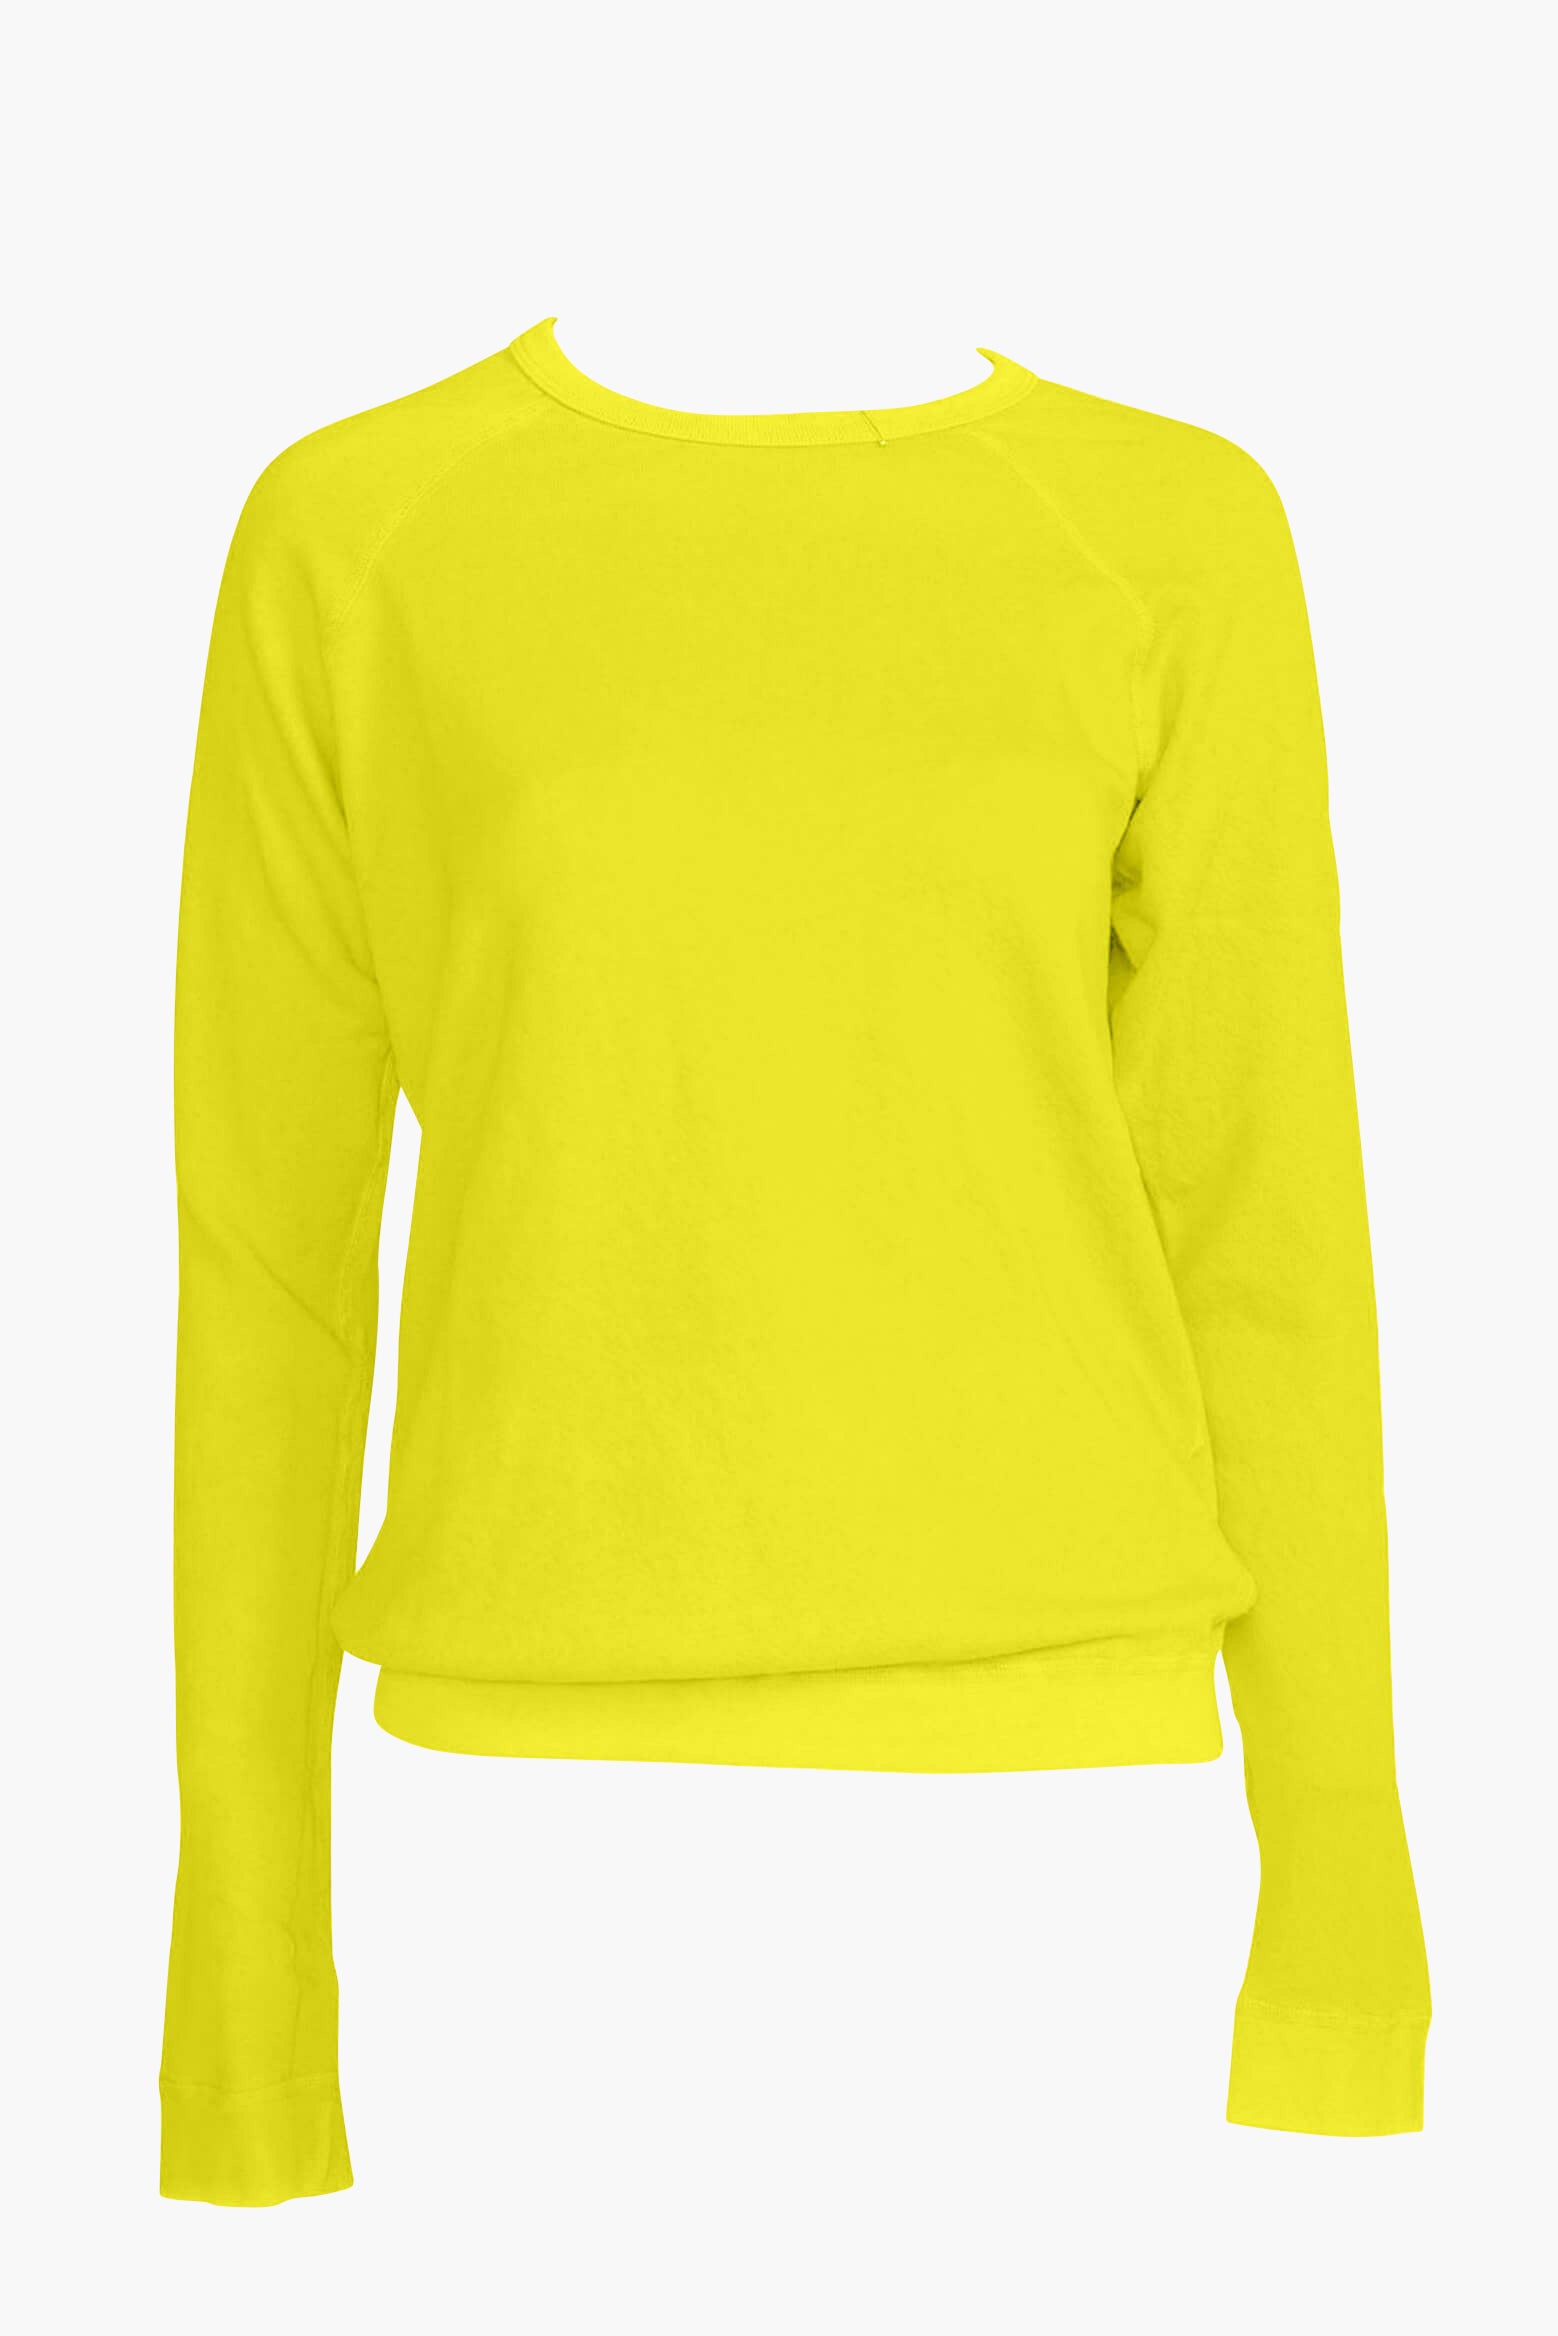 FreeCity Lucky Rabbits Sweatshirt in Yellow Rabbit from The New Trend